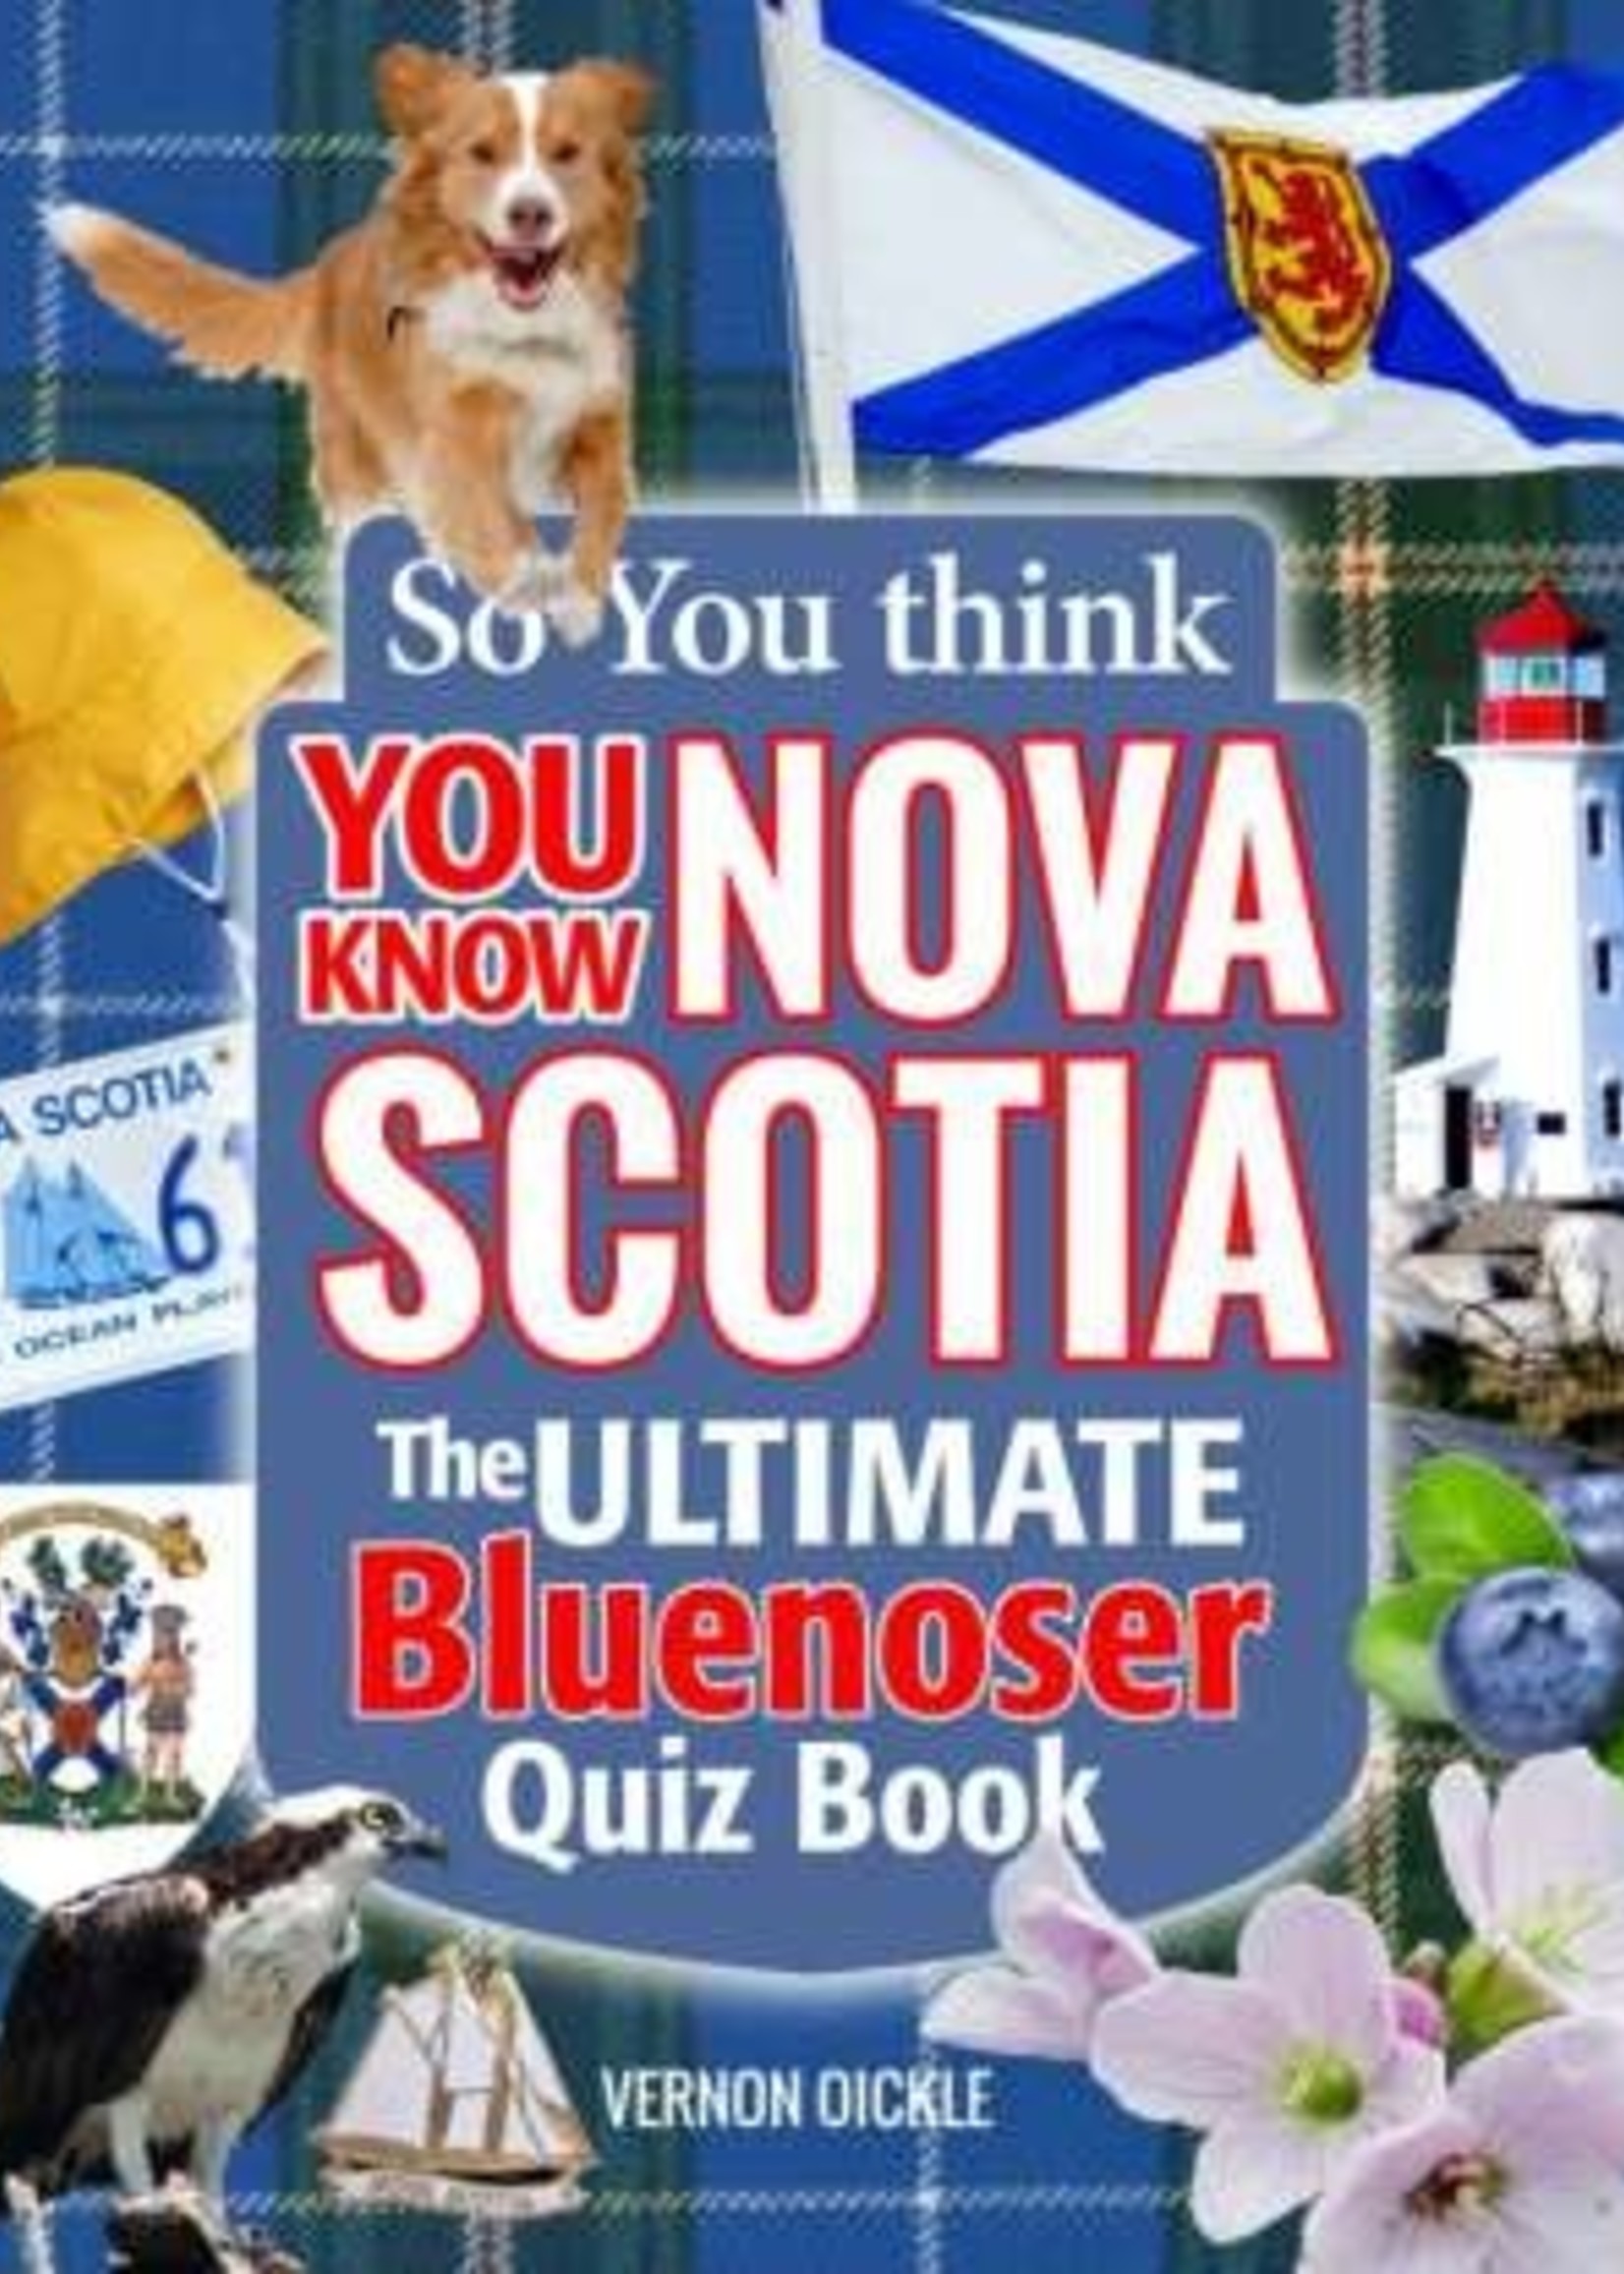 So you think you know Nova Scotia: The ULTIMATE Bluenoser Quiz Book by Vernon Oickle